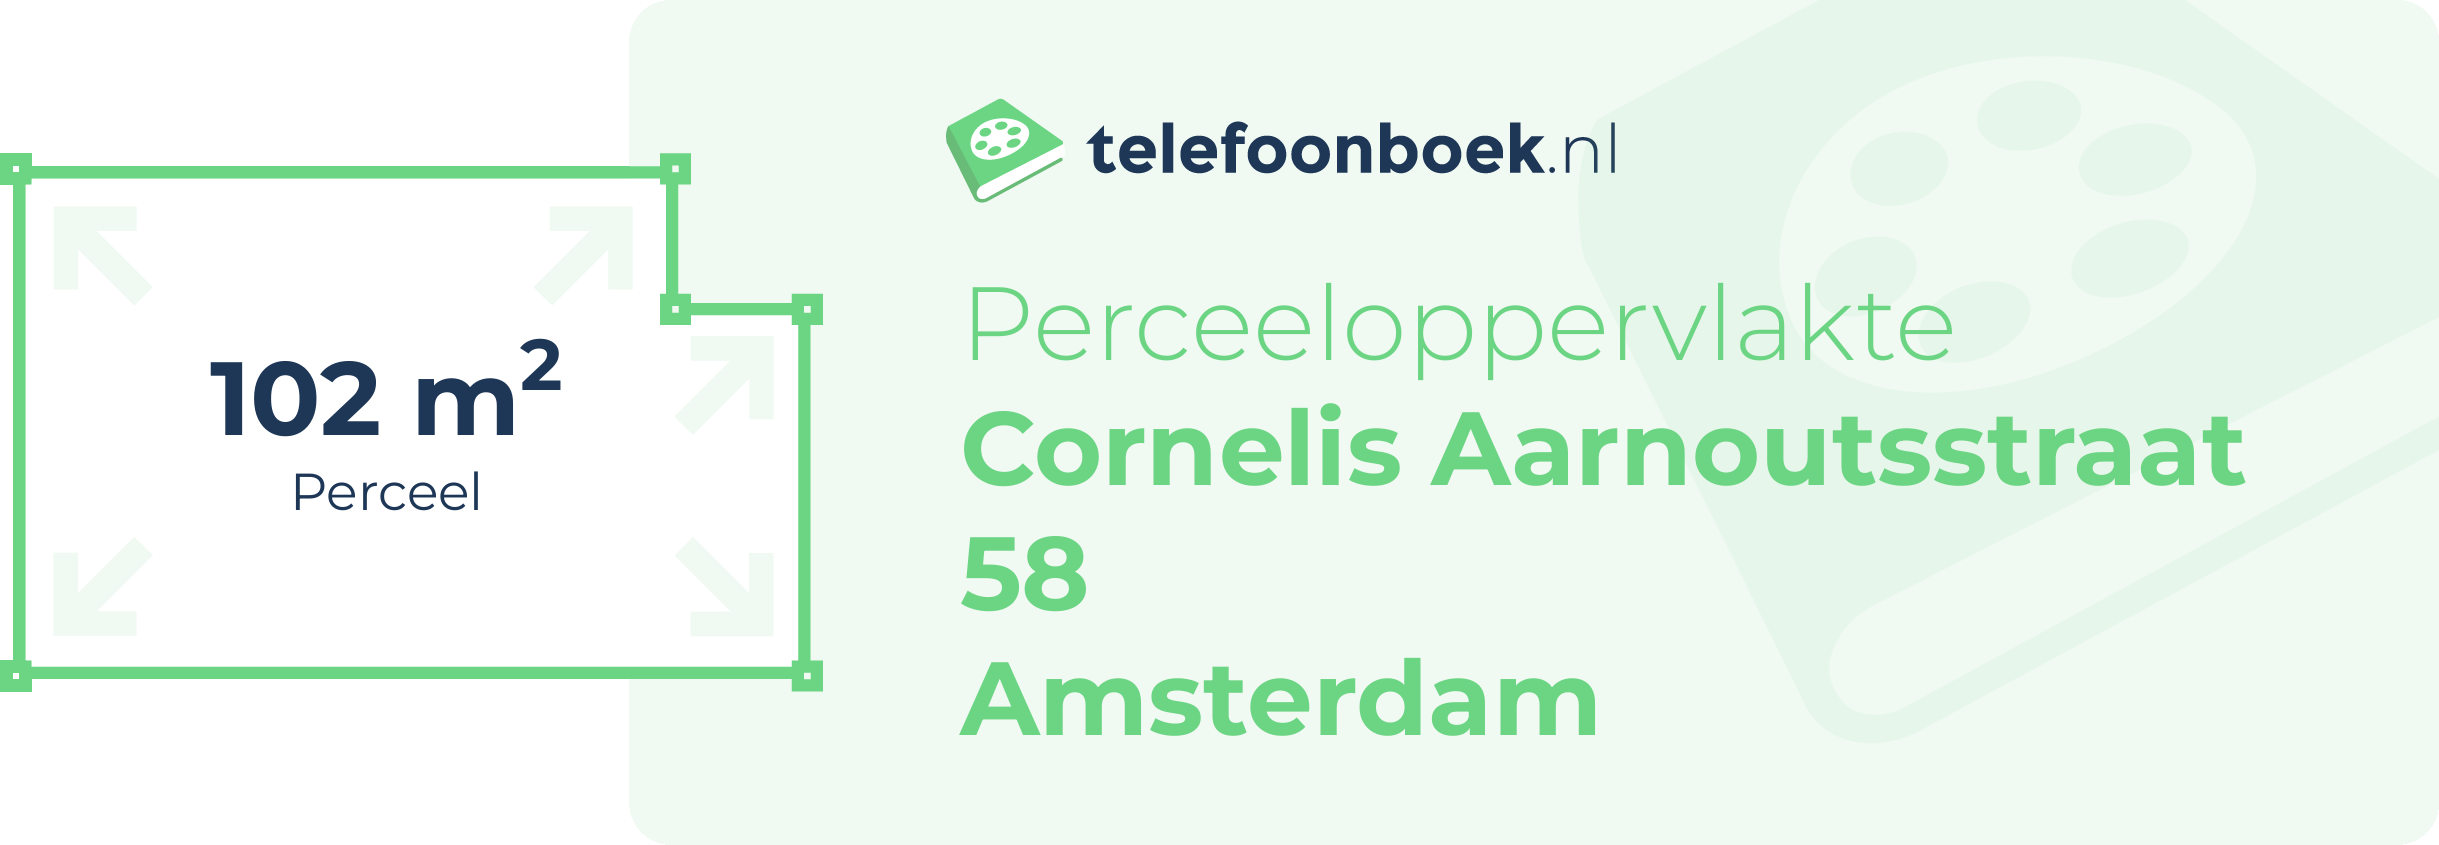 Perceeloppervlakte Cornelis Aarnoutsstraat 58 Amsterdam